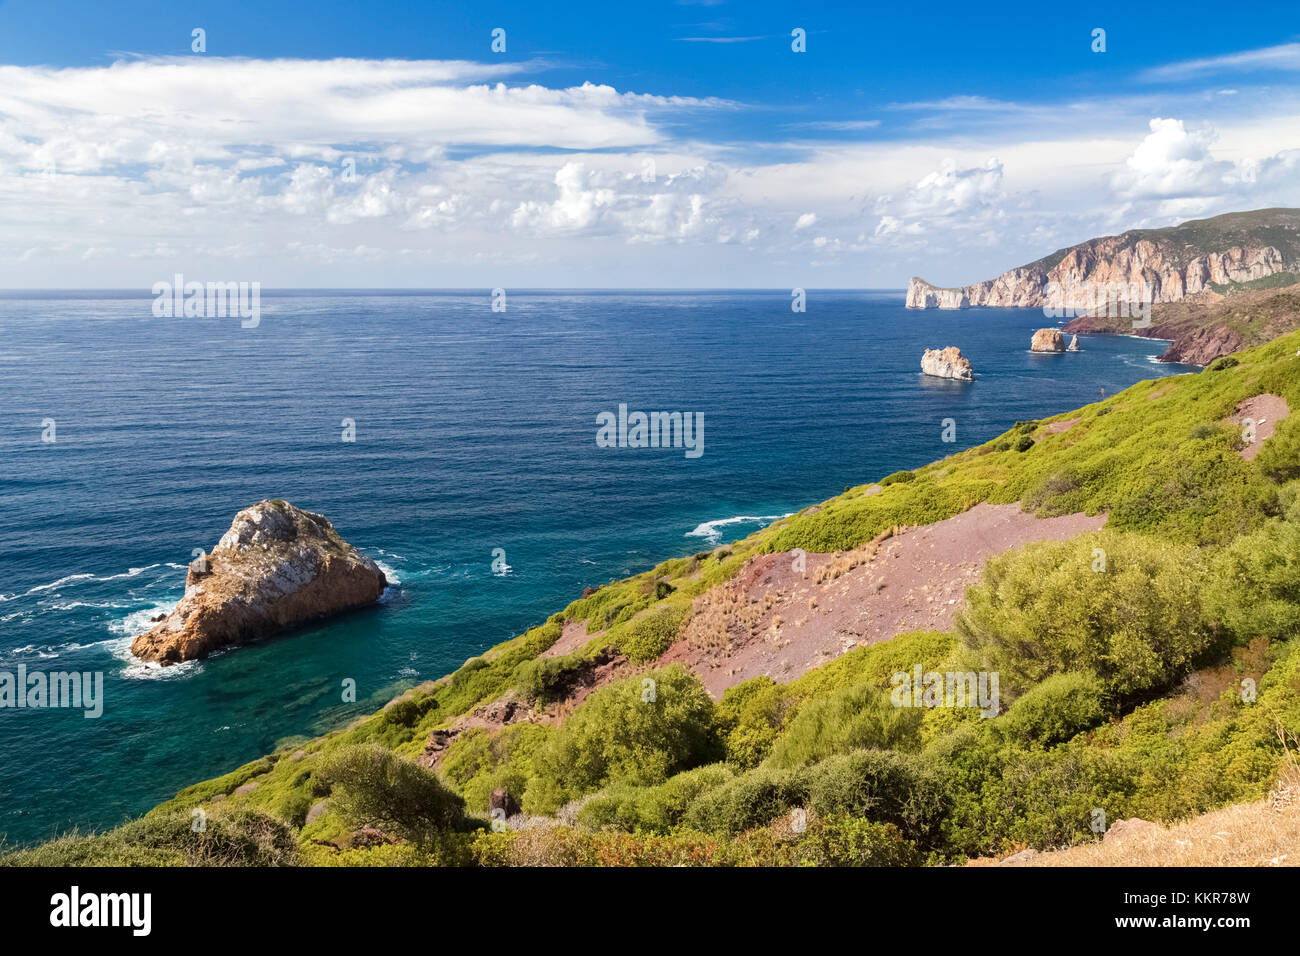 View of the coast near Masua, in the distance the Pan di Zucchero reef. Masua, Sulcis-iglesiente, Iglesias, Sardinia, Italy. Stock Photo